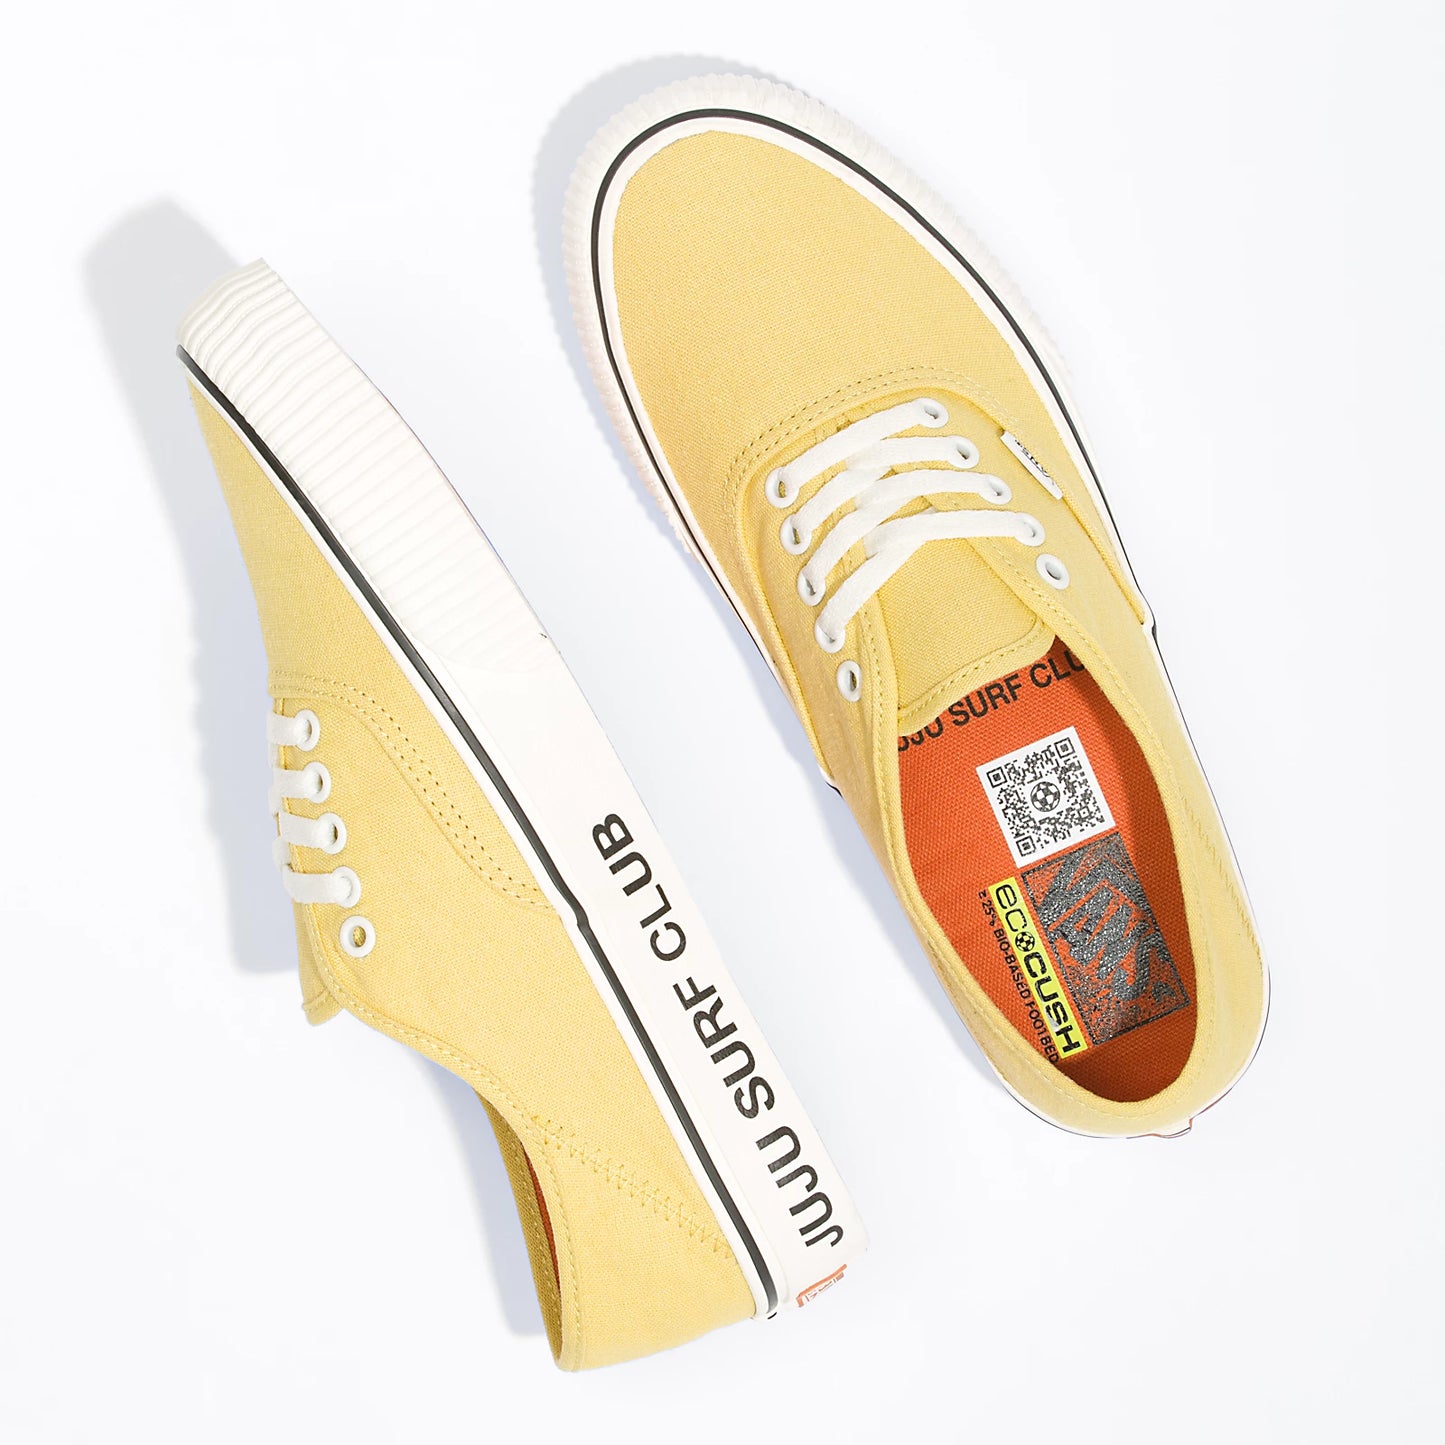 Original Vans Shoe X Juju Surf Club Authentic VR3 SF - Mineral Yellow